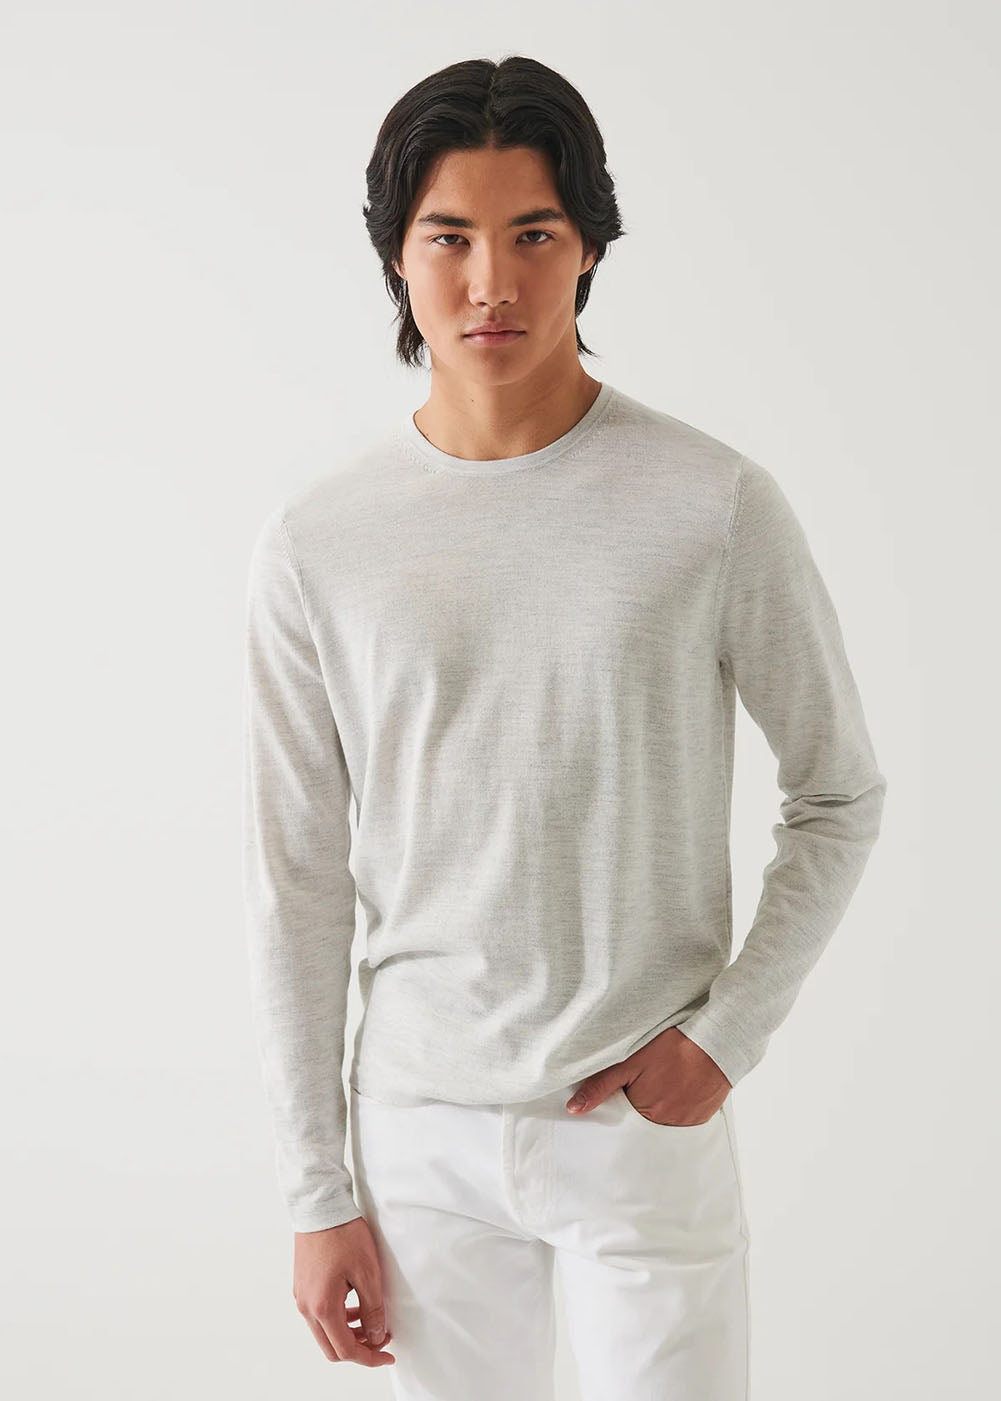 Cotton Cupro Crewneck Sweater - Drizzle - Patrick Assaraf Canada - Danali - P154C06X